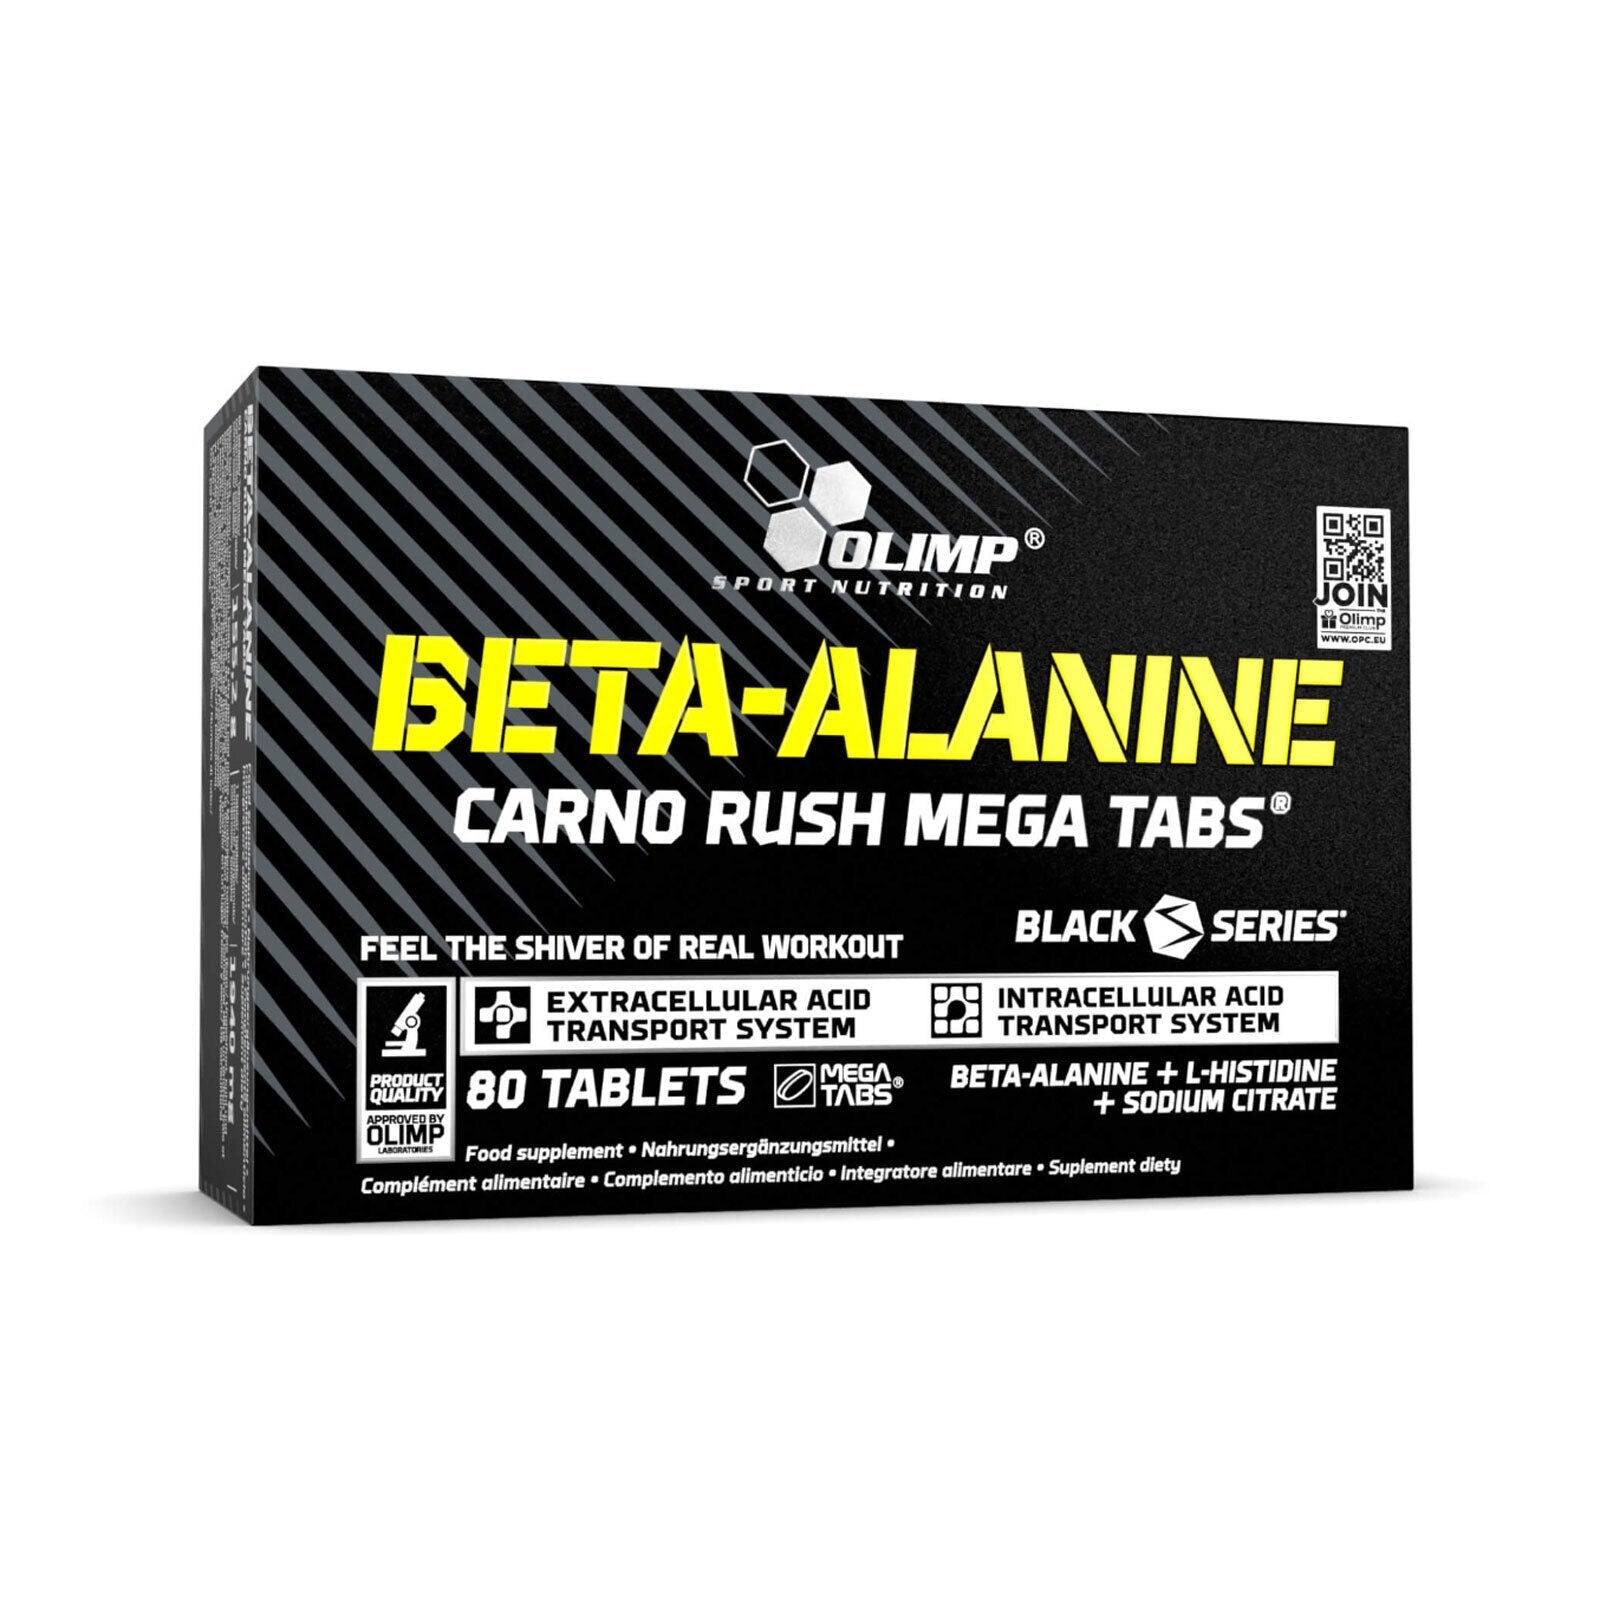 Olimp Nutrition Beta Alanine Camo Rush Mega Tabs 80 Tablets 